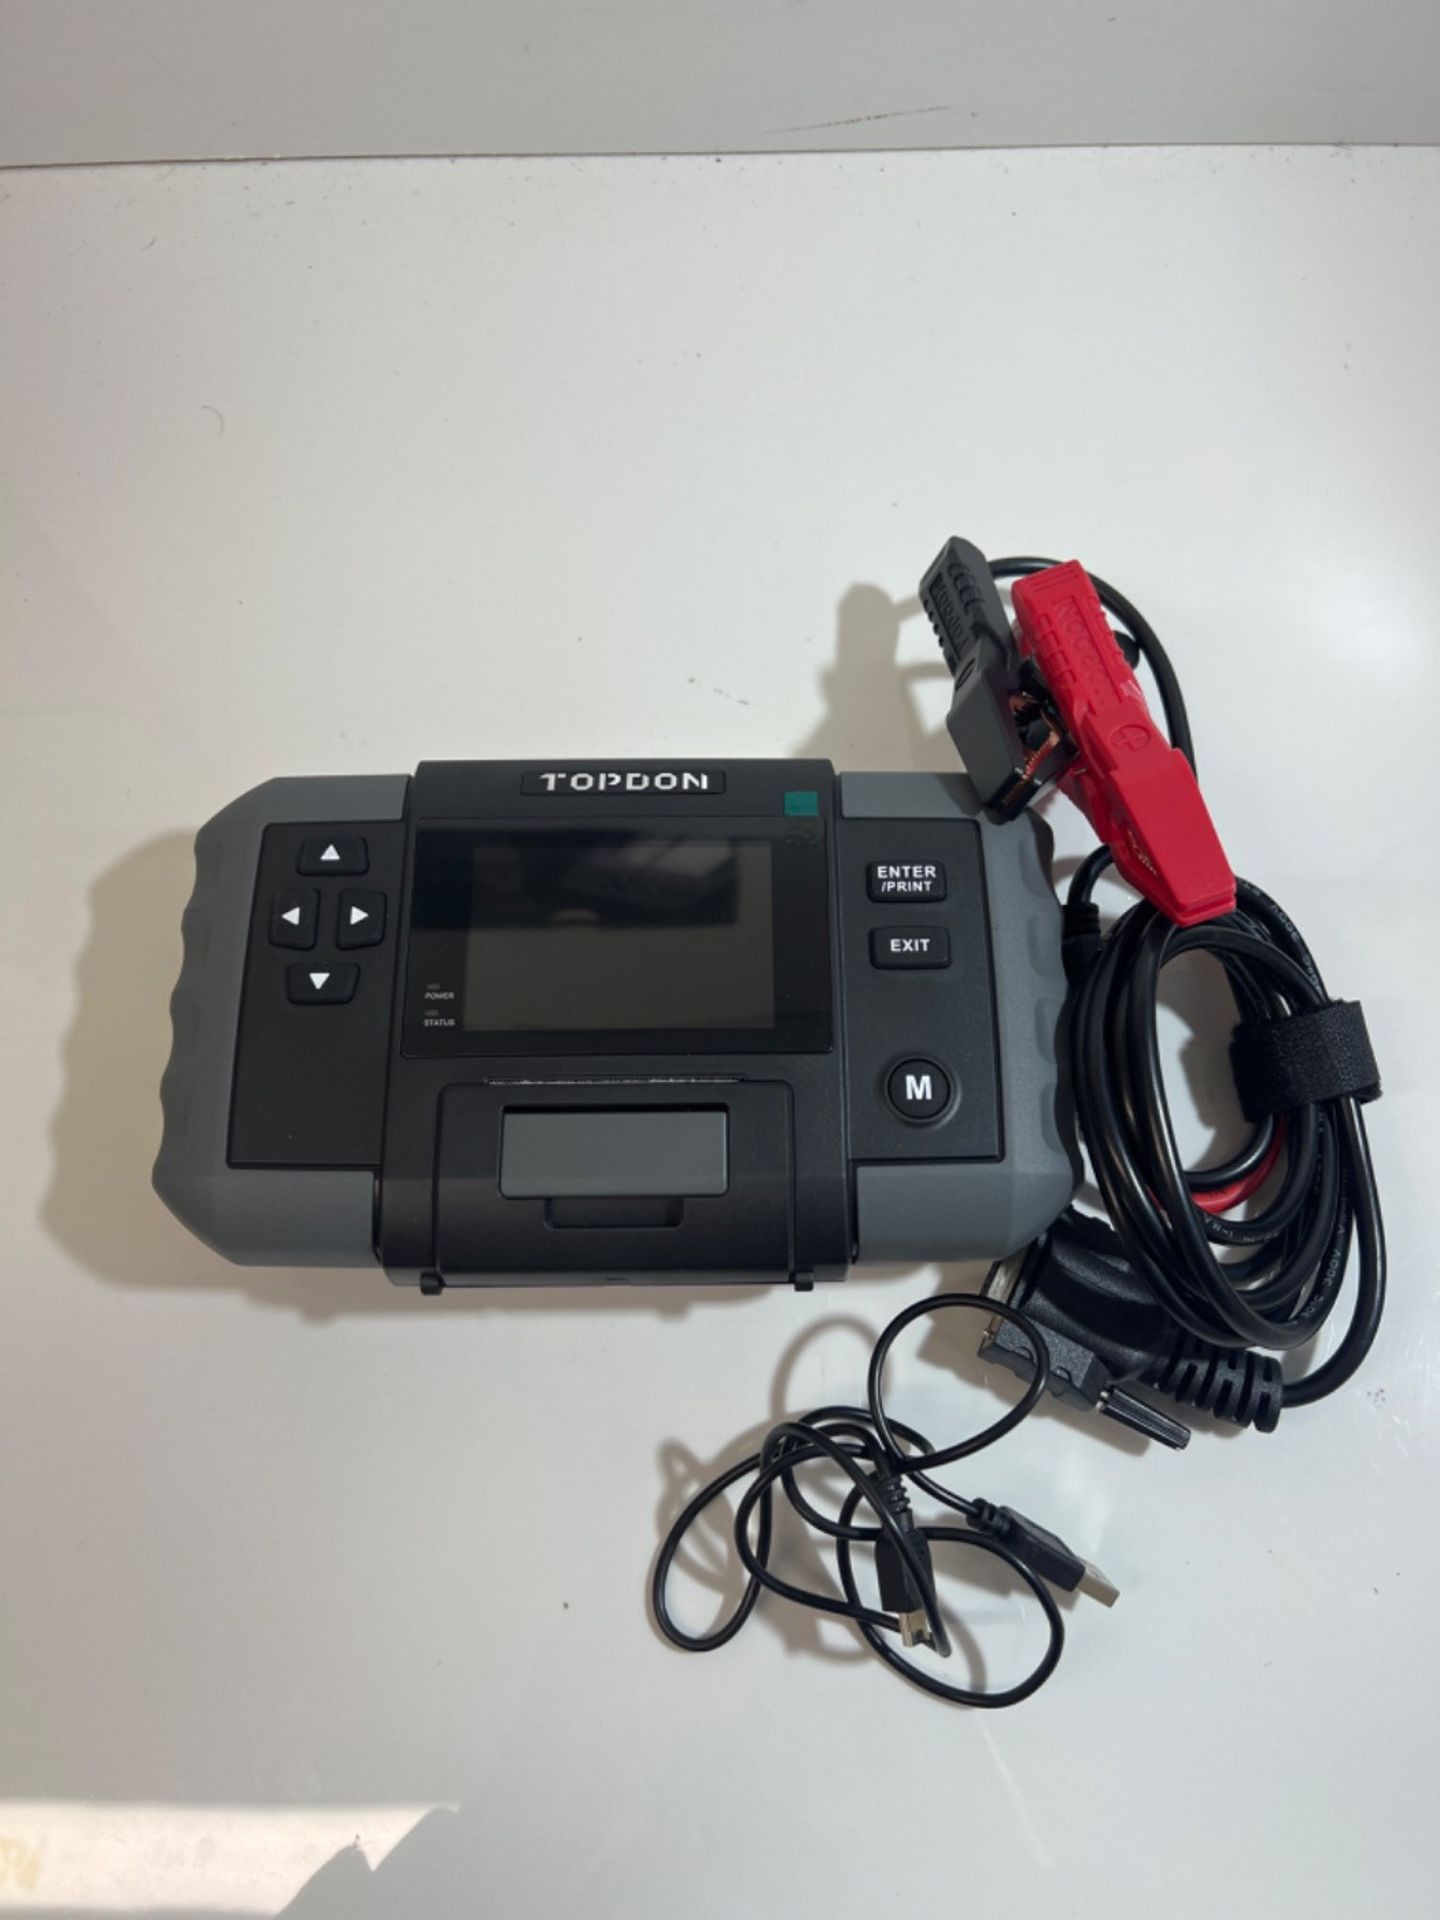 Topdon Battery Tester BT600, 12V 24V Car Battery Tester With Printer, 100 To 2000 CCA, 3.5" Colour.. - Image 2 of 3